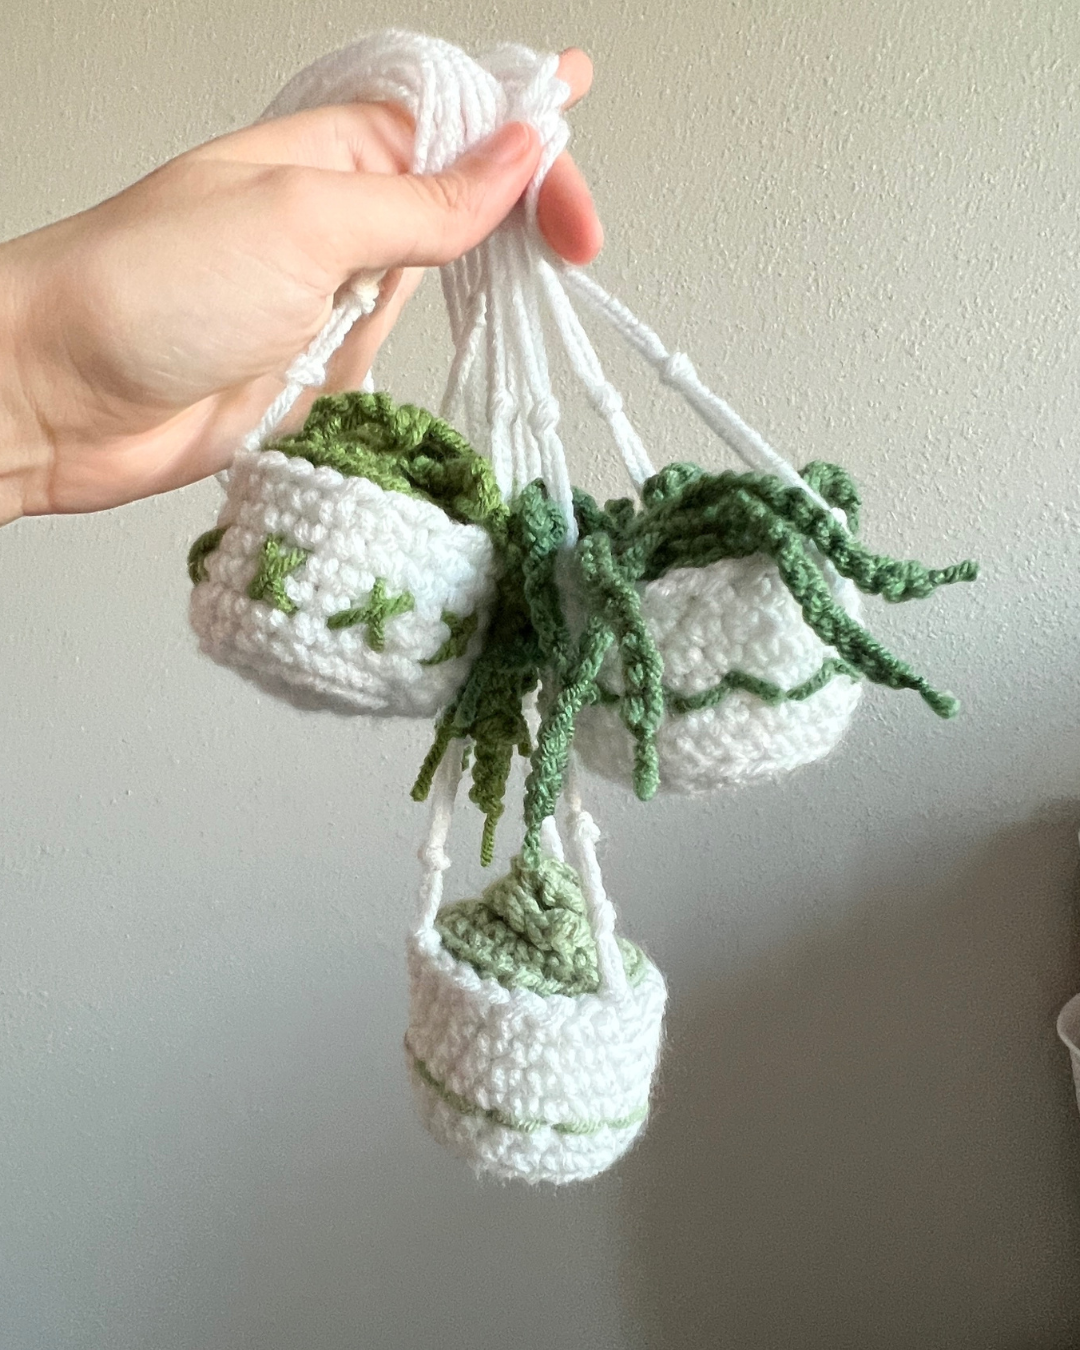 SHOOKY Crochet Kit